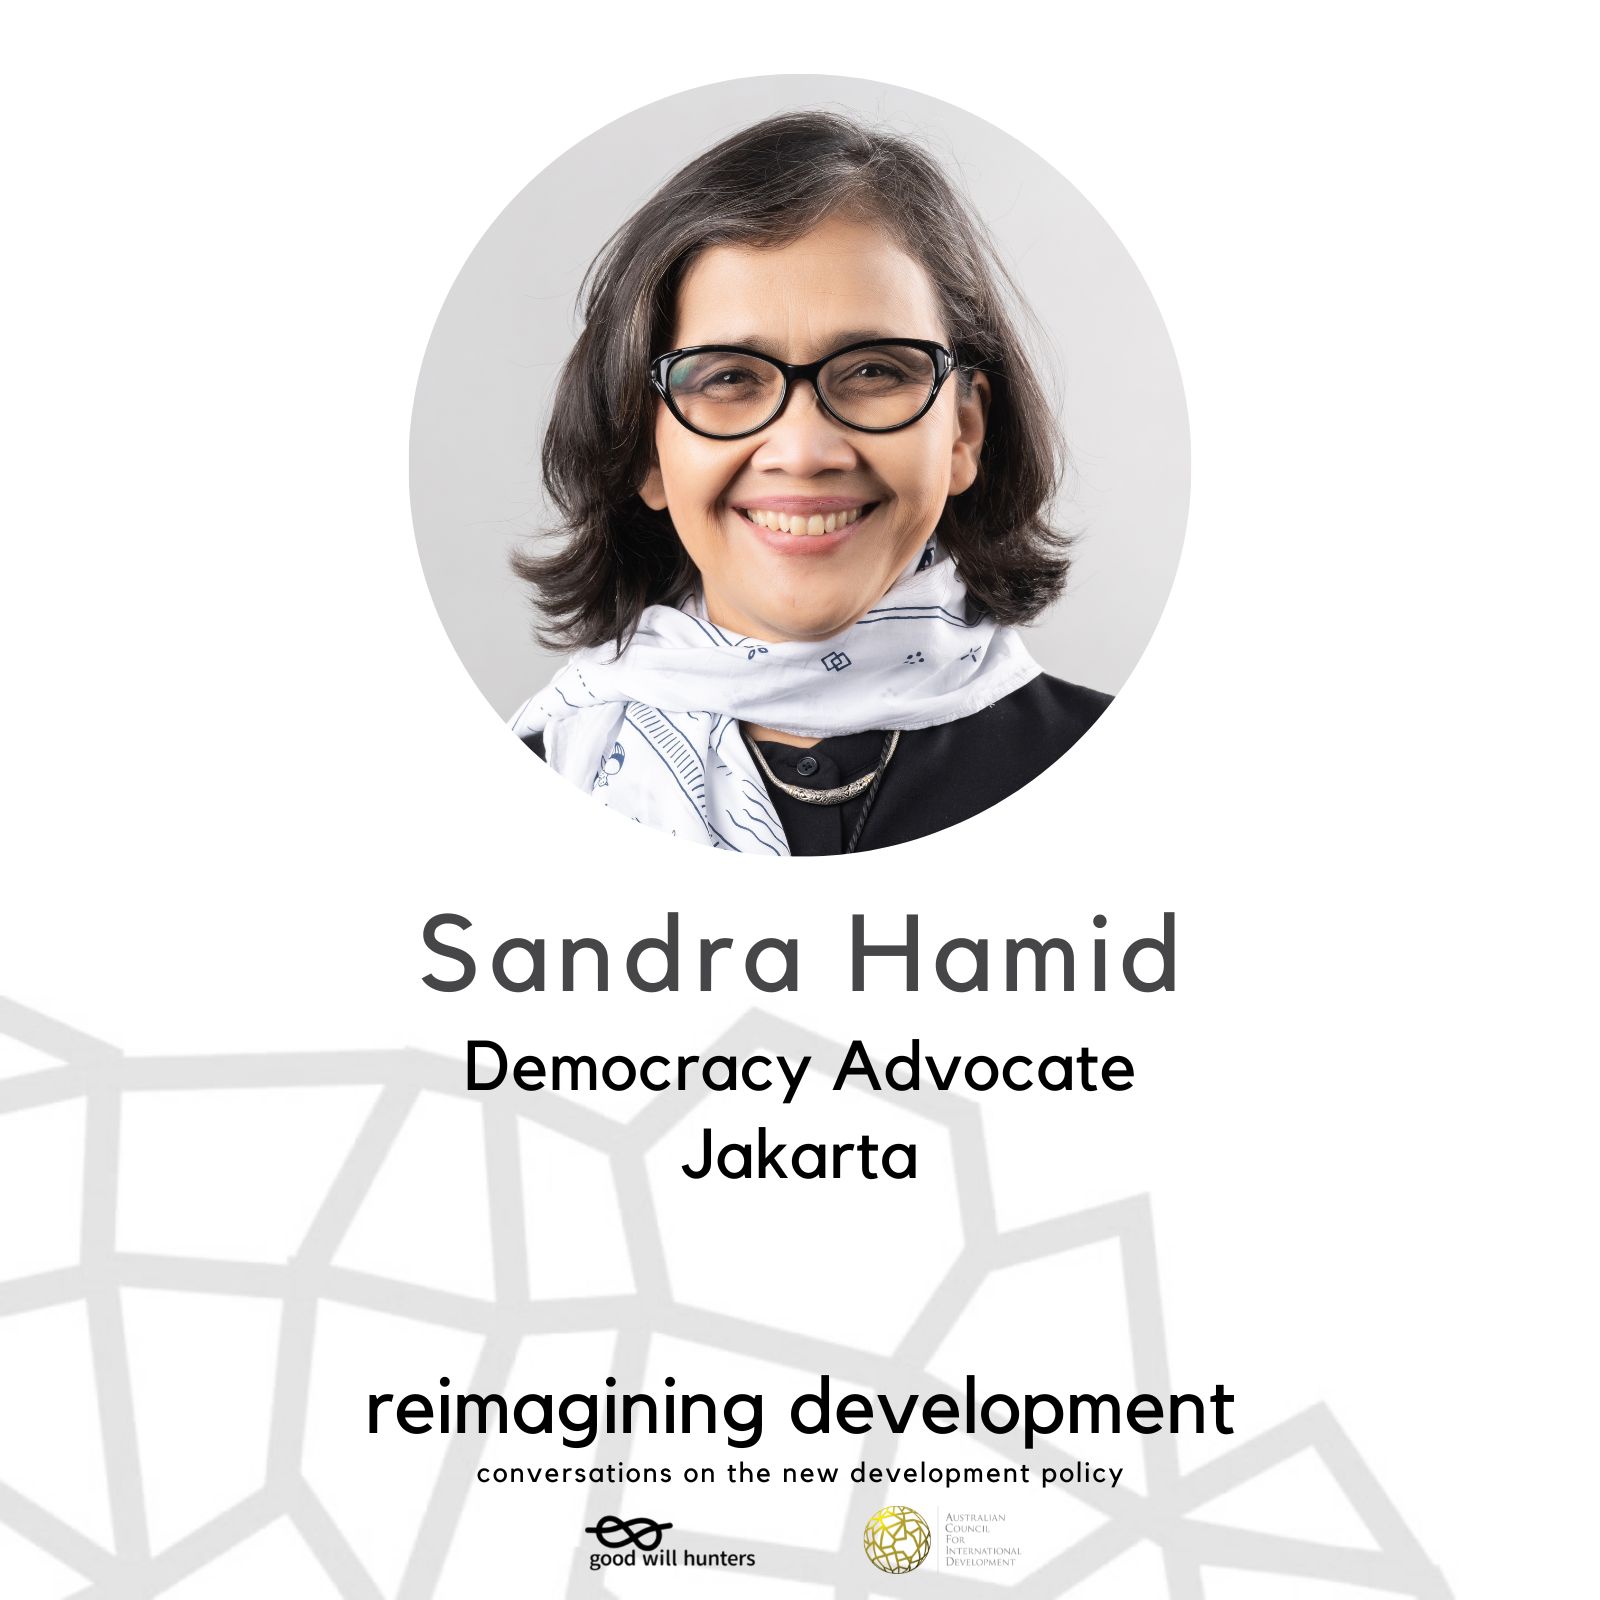 Sandra Hamid, Democracy Advocate, Jakarta on Reimagining Development